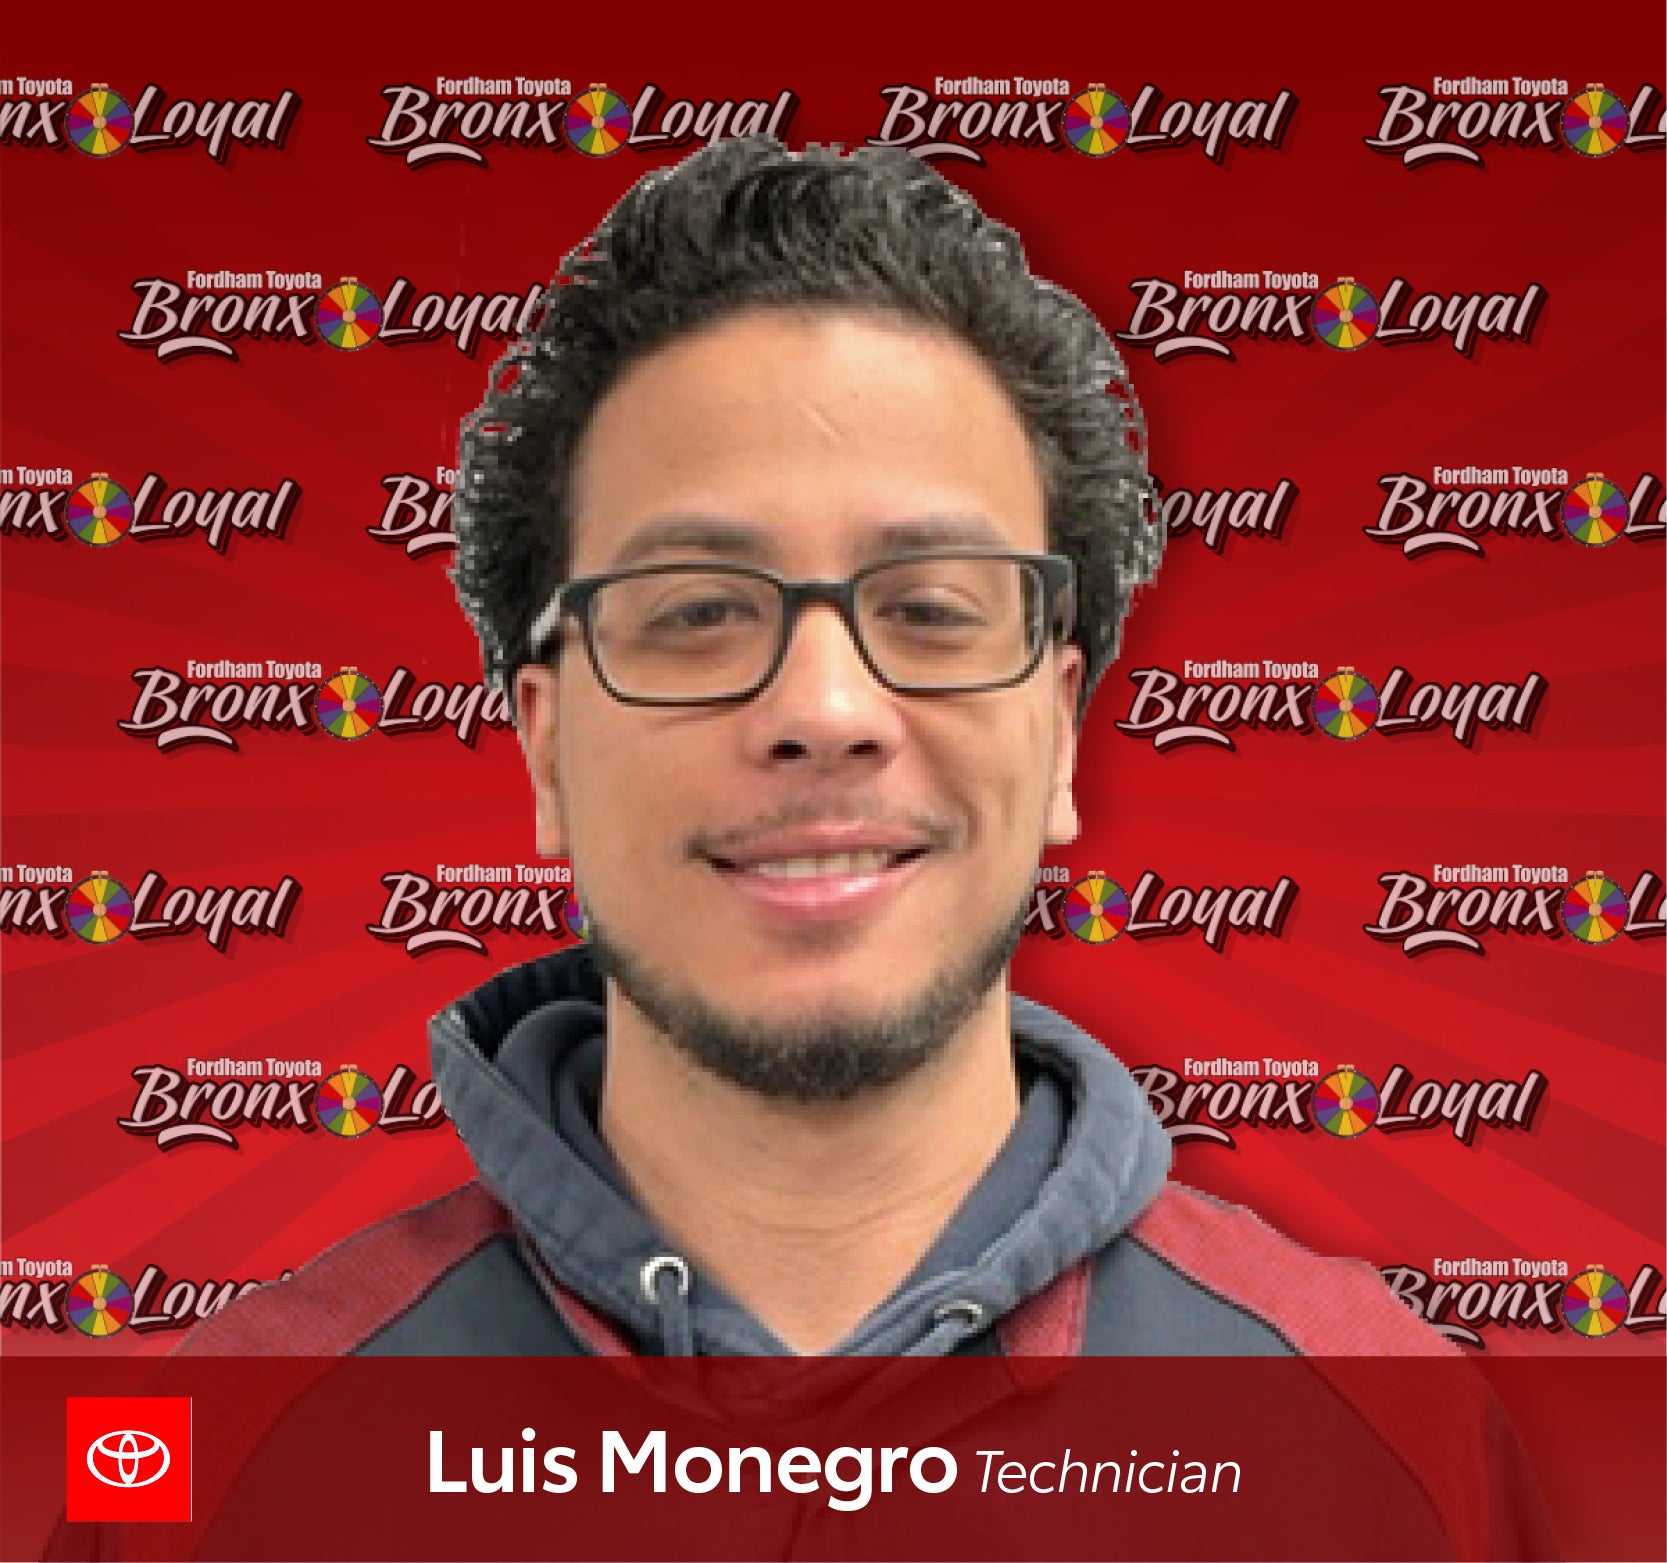 Luis Monergro